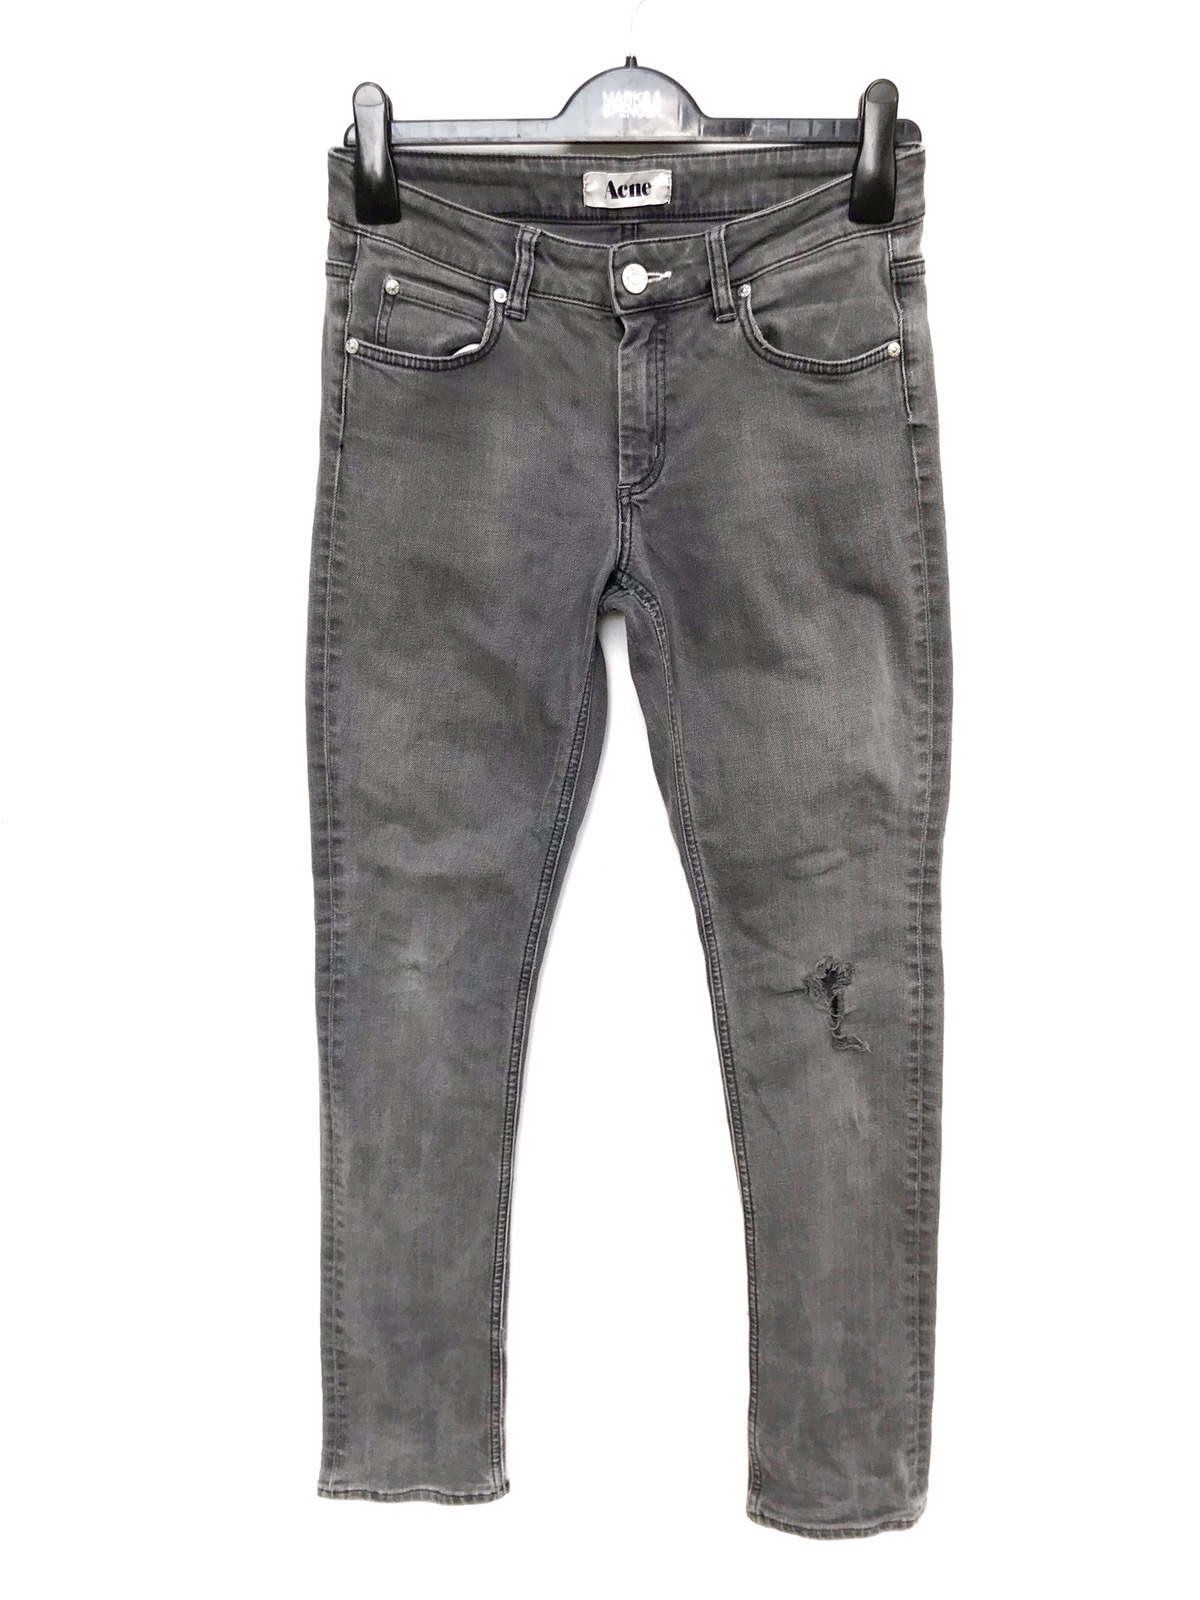 Acne Studios Distressed Skinny Jeans - 1